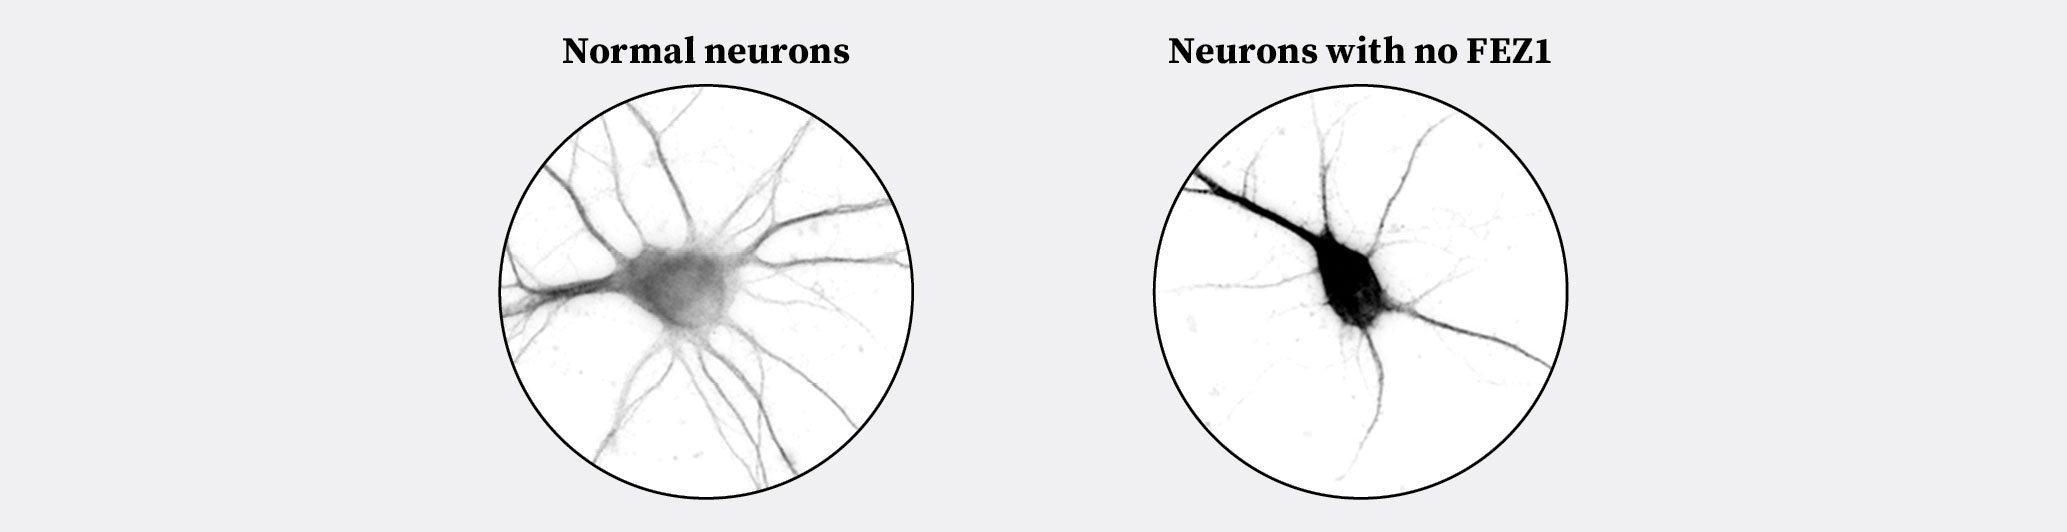 Insert Image - Figure 2 - Neuronal networks